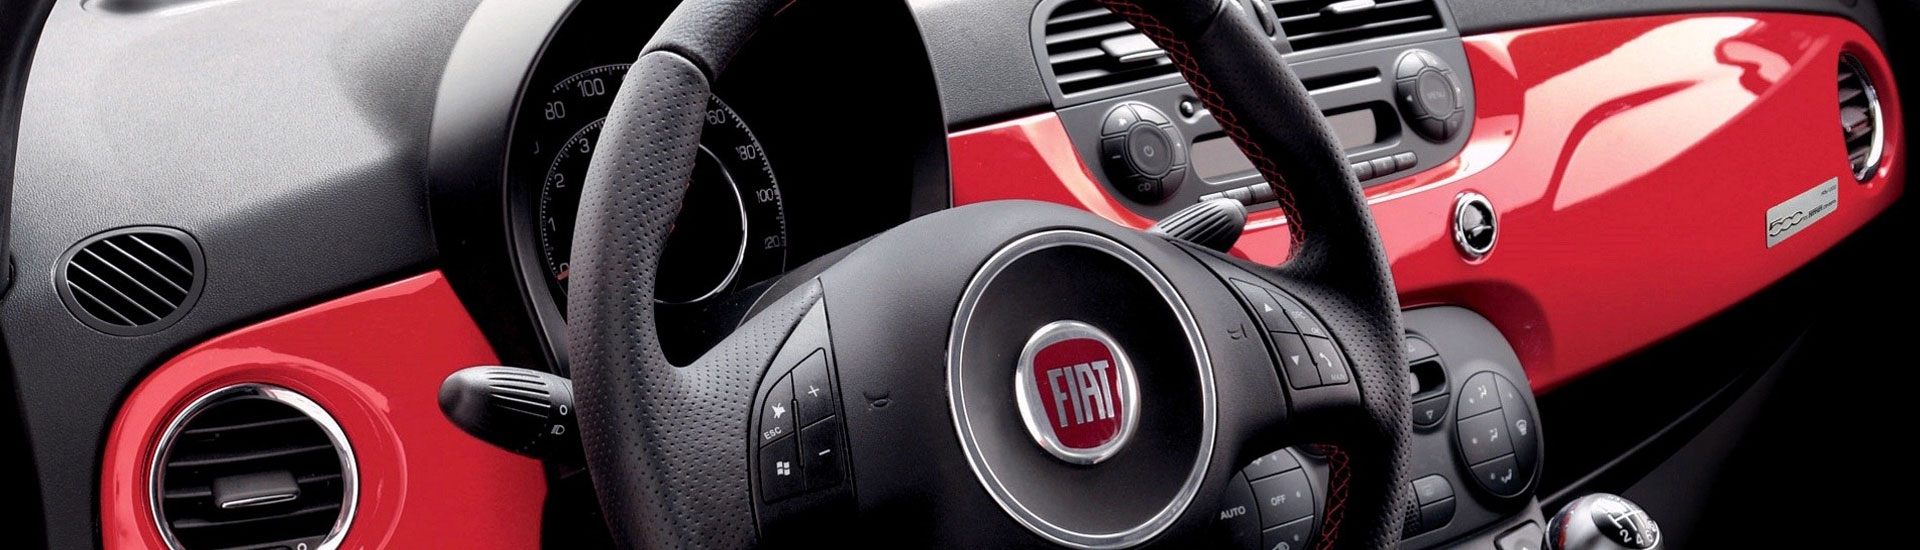 2014 Fiat 500 Custom Dash Kits